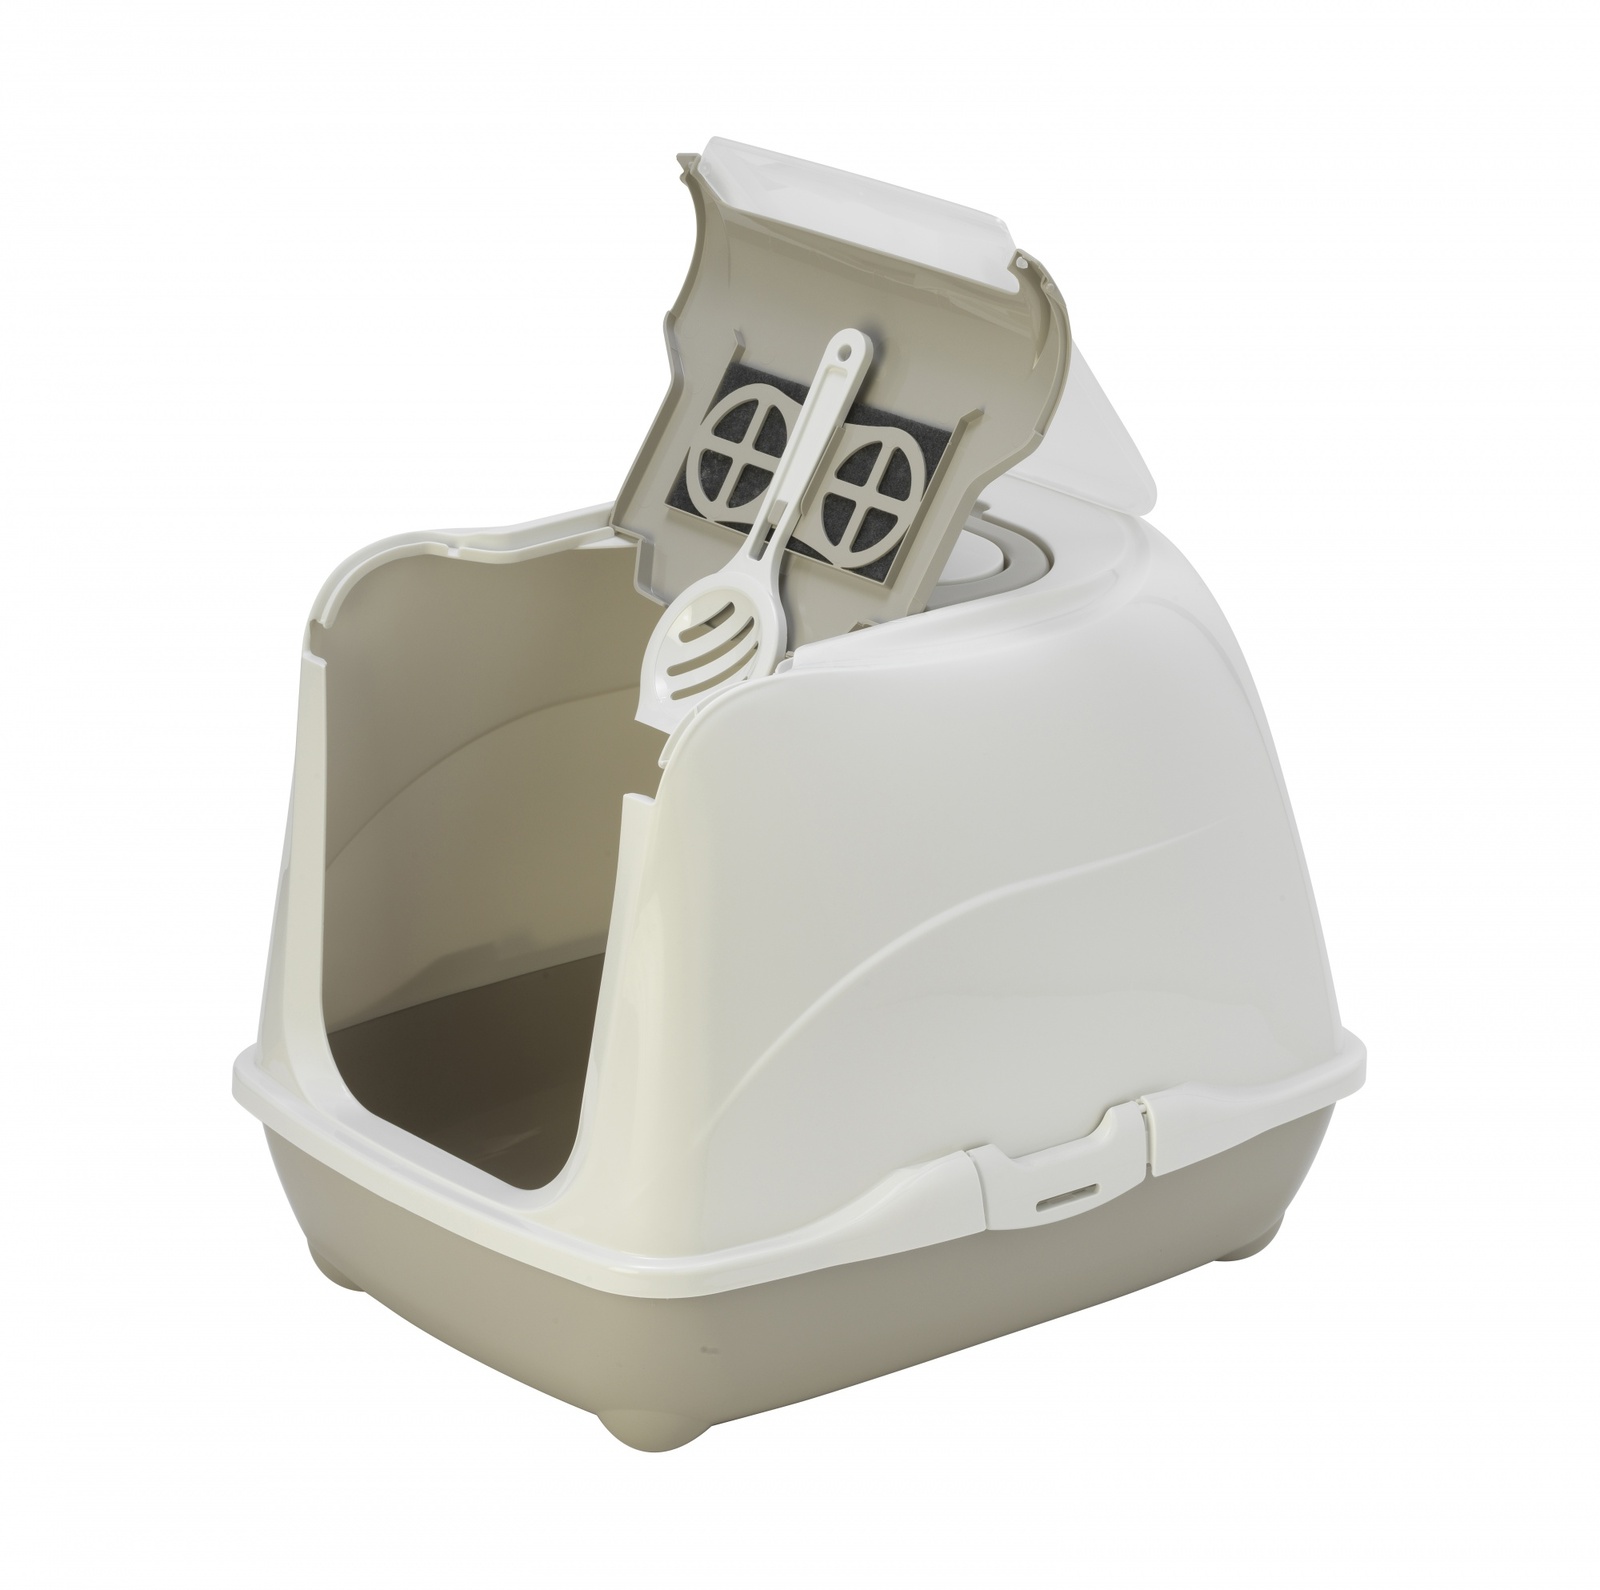 Moderna Moderna туалет-домик Flip с угольным фильтром, 50х39х37см, теплый серый (1,2 кг)